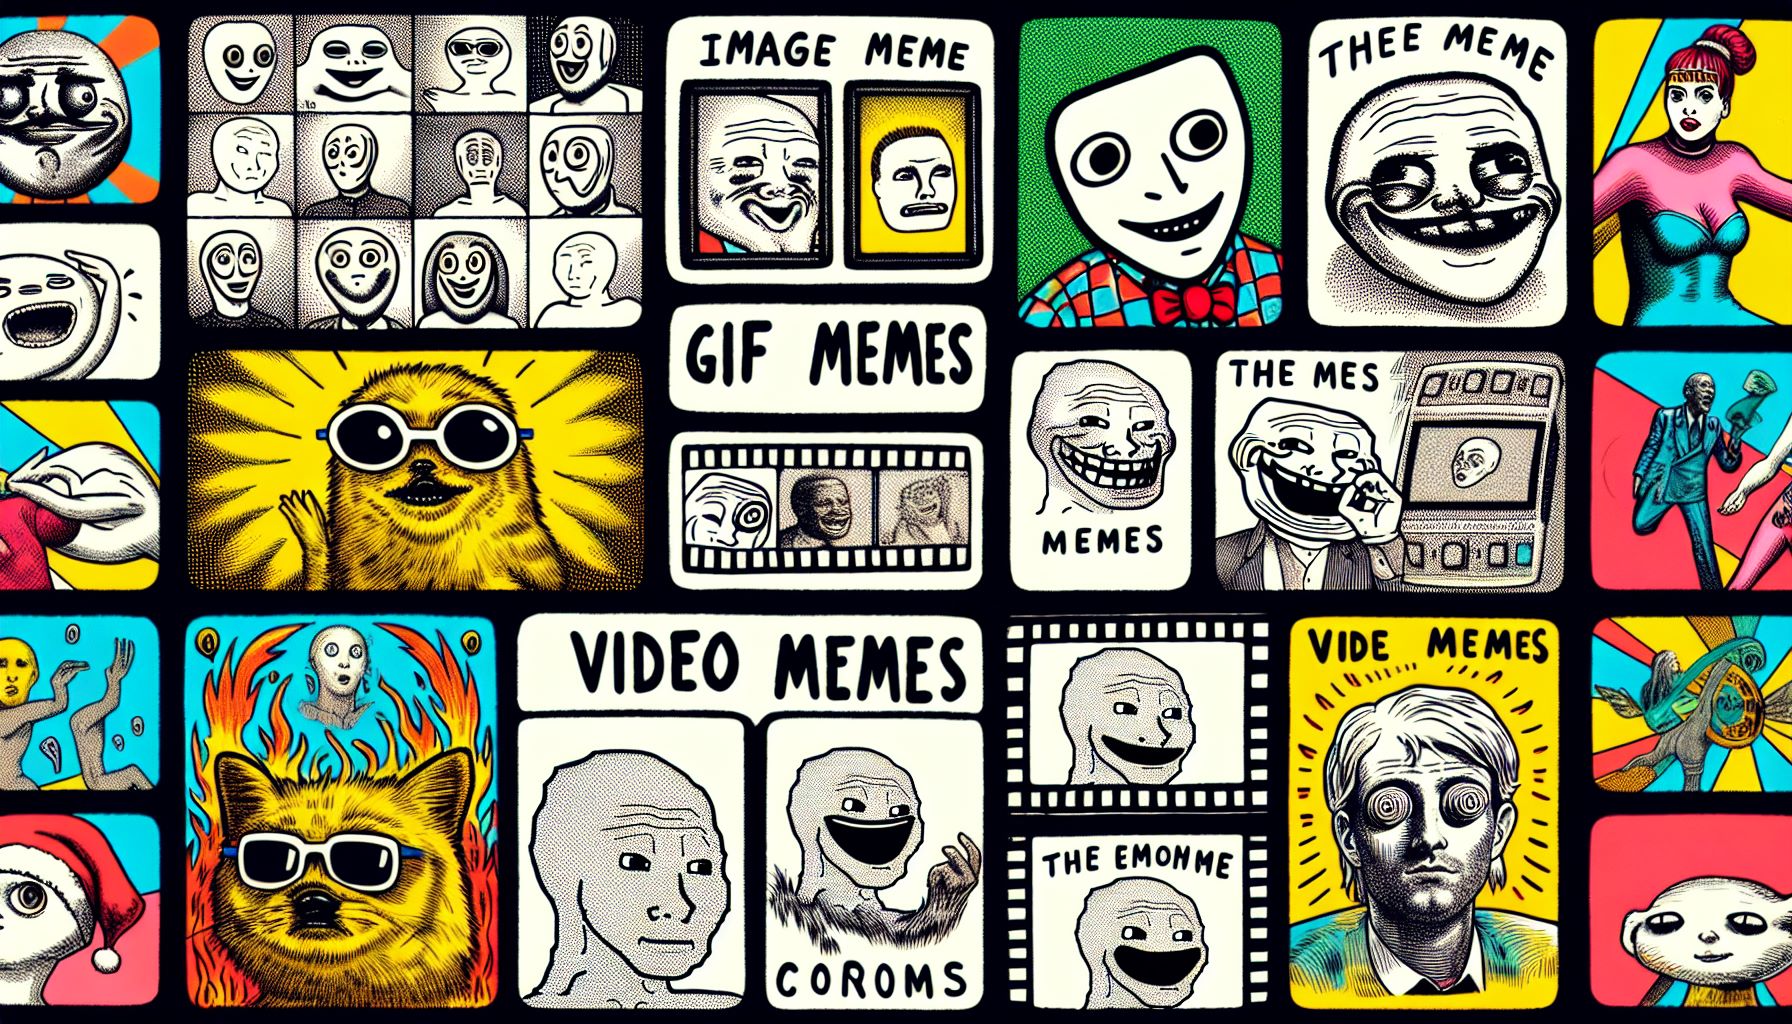 Popular meme formats